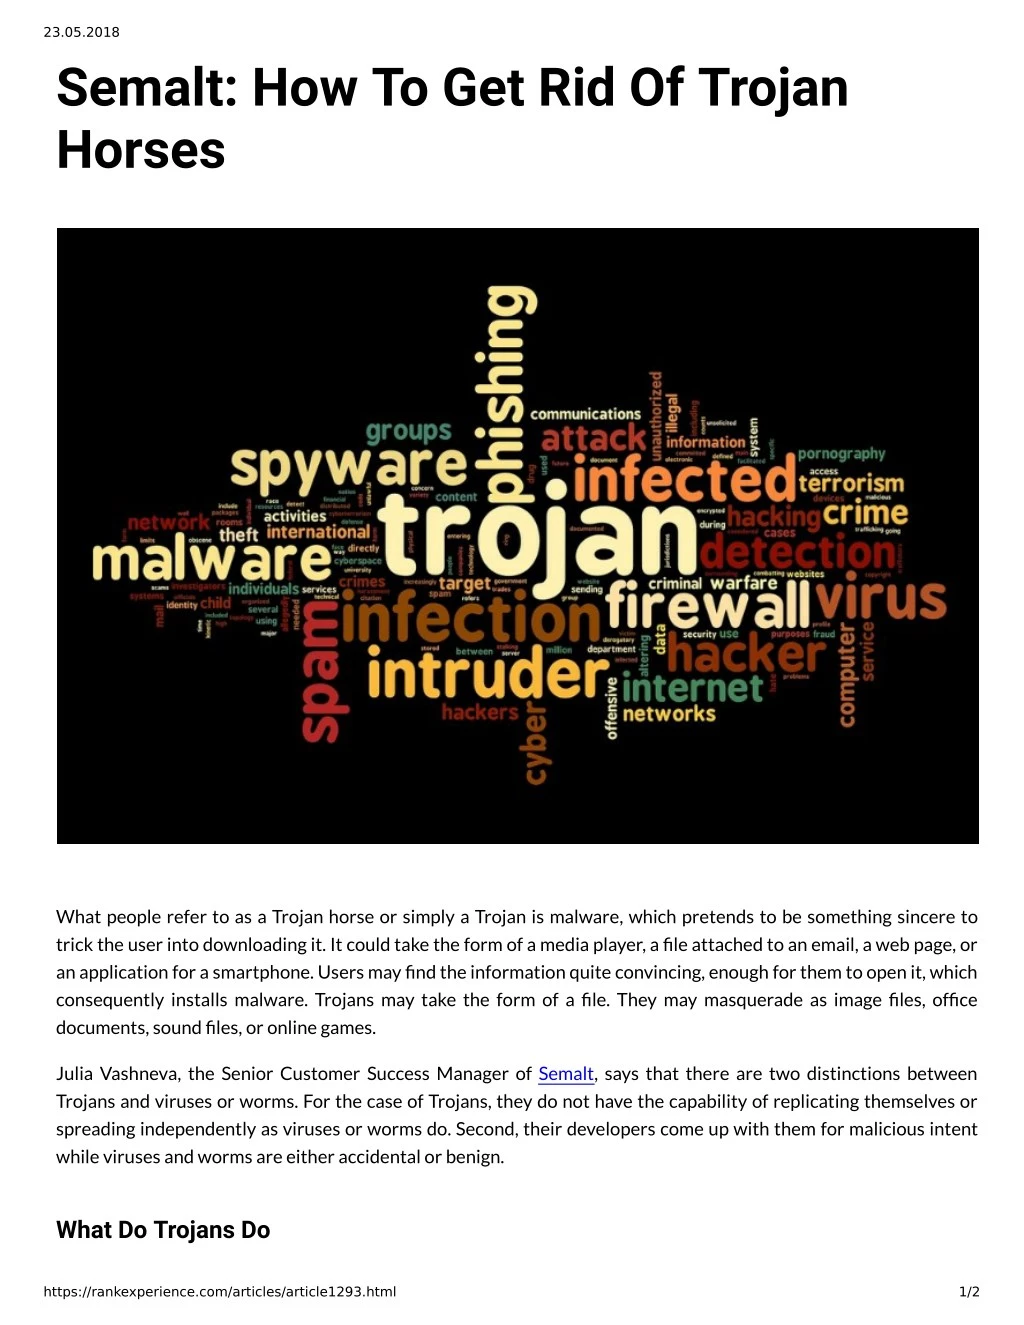 23 05 2018 semalt how to get rid of trojan horses